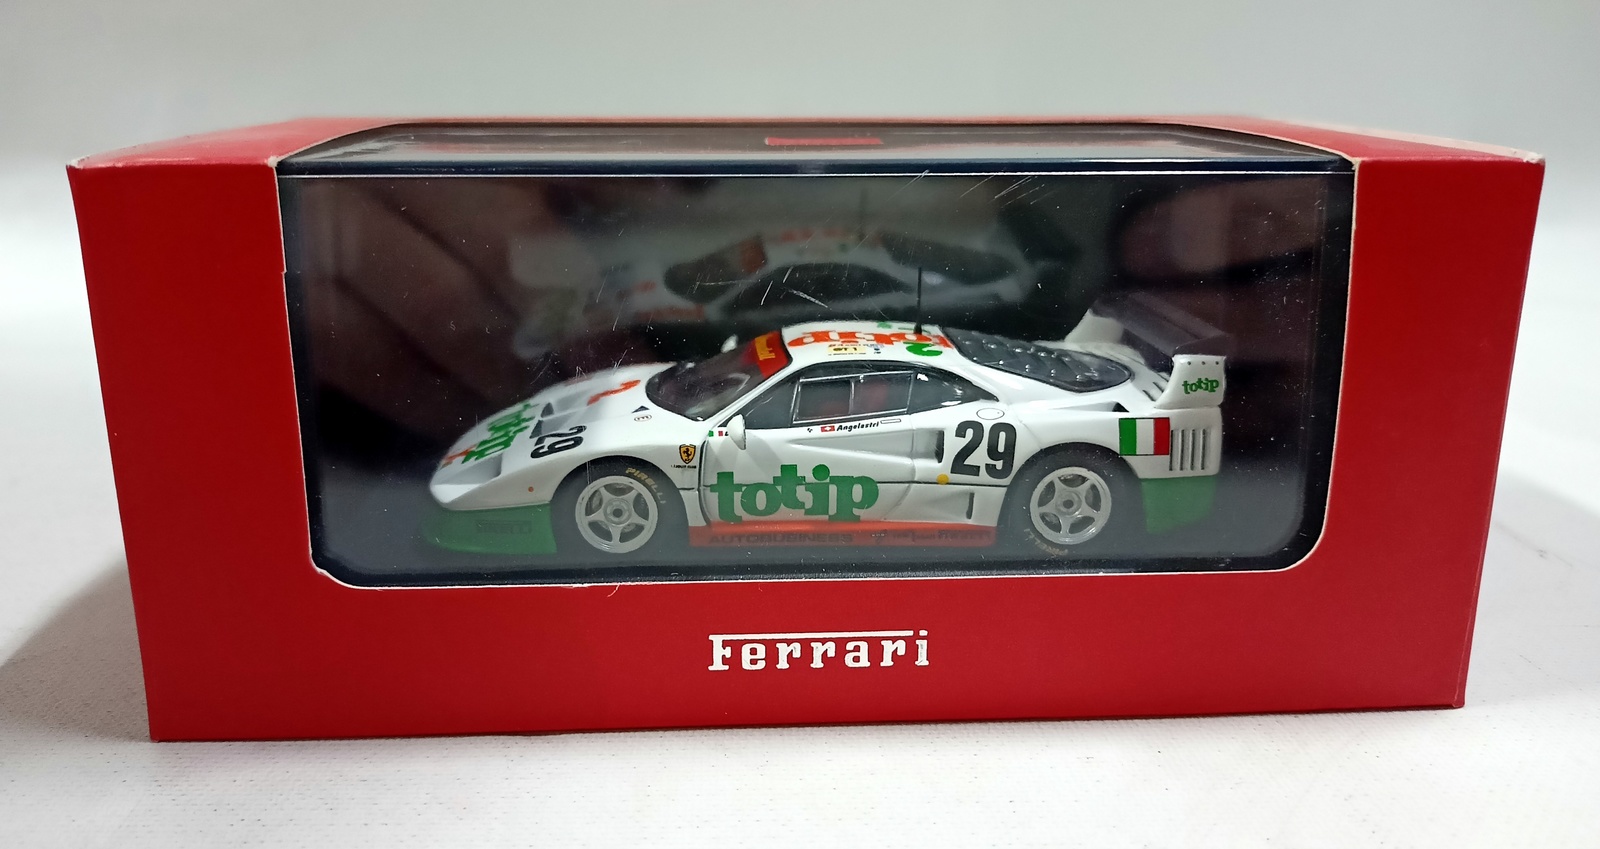 Diecast Car 1/43 scale Ixo " Ferrari F40" #29 Le Mans 1994 #FER010  - $25.00